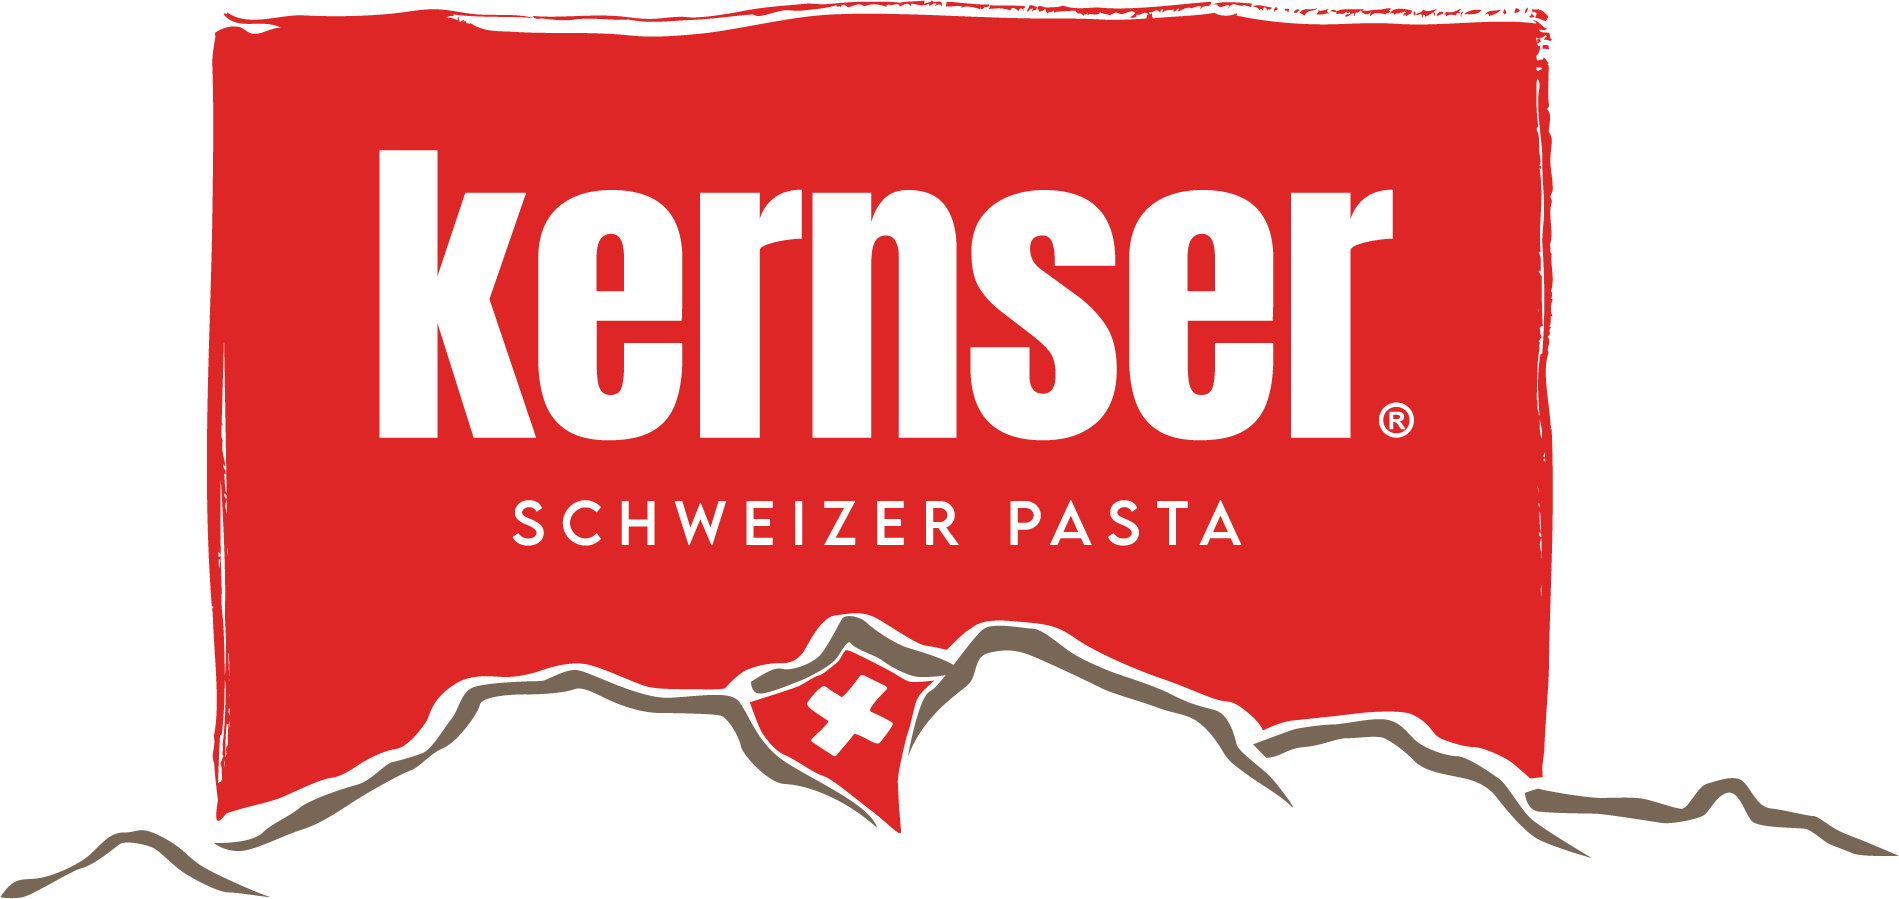 kernser_logo_freistehend_rgb